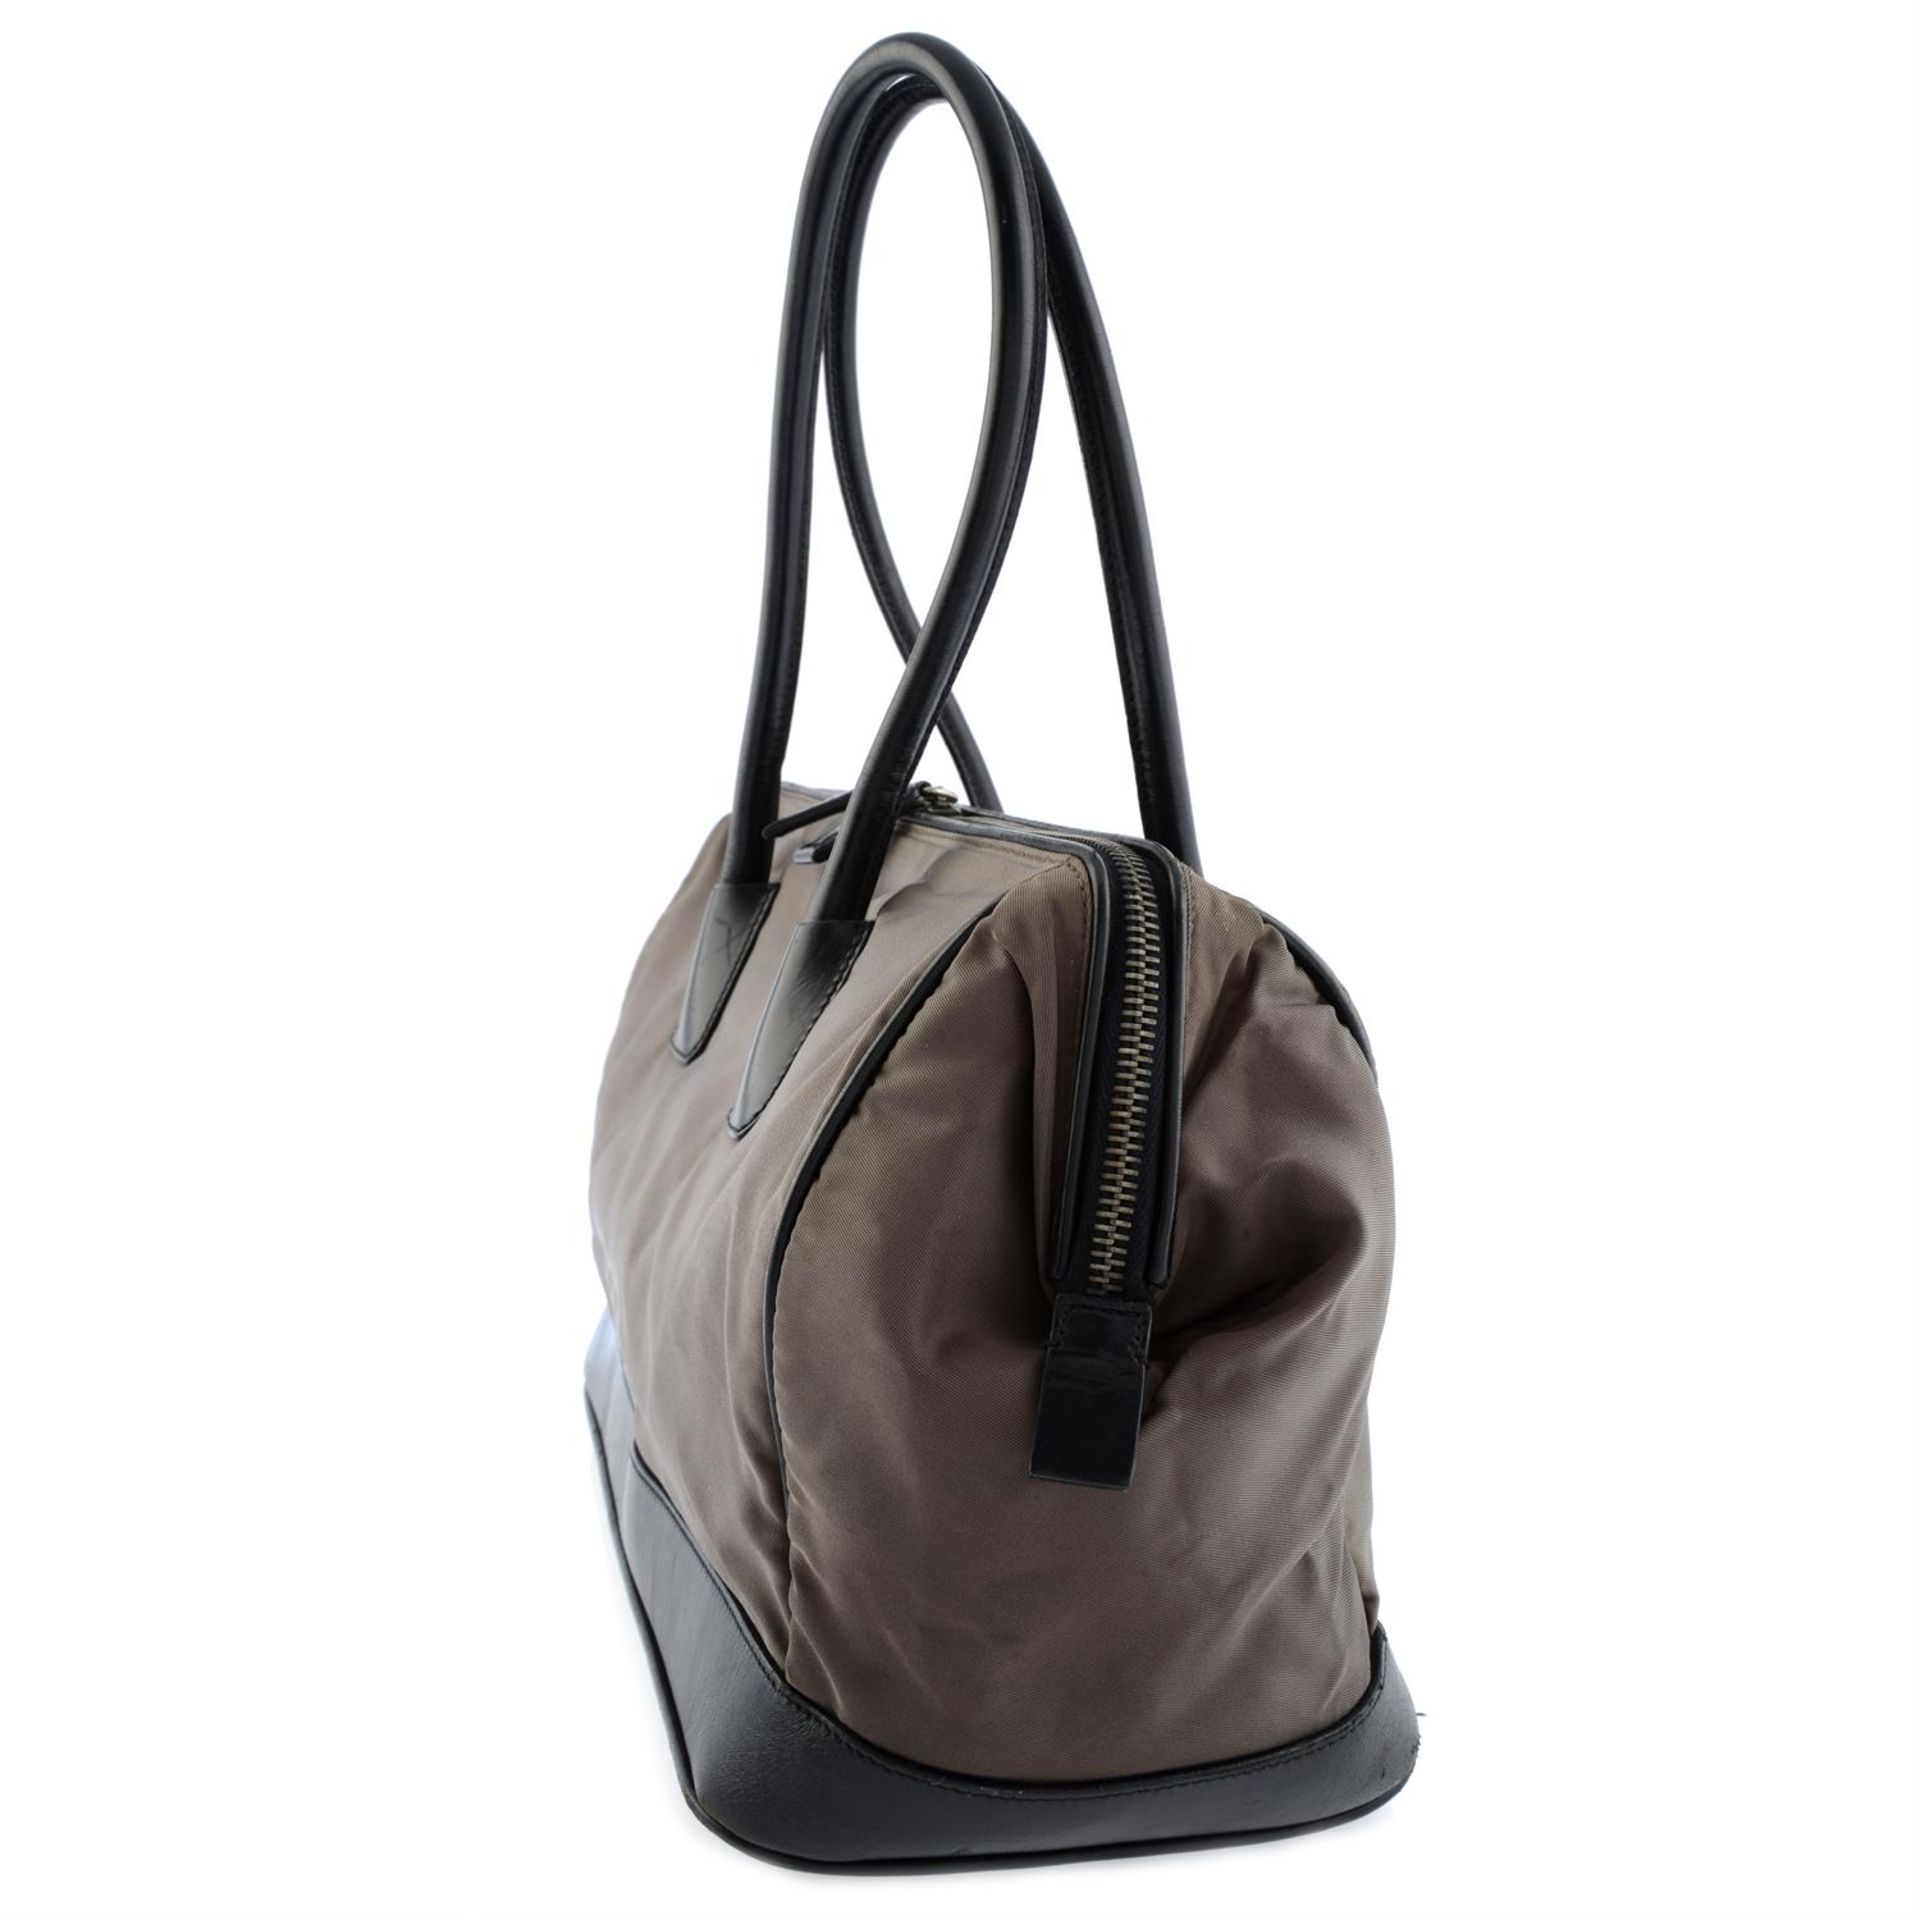 Prada - Tessuto handbag. - Image 3 of 5